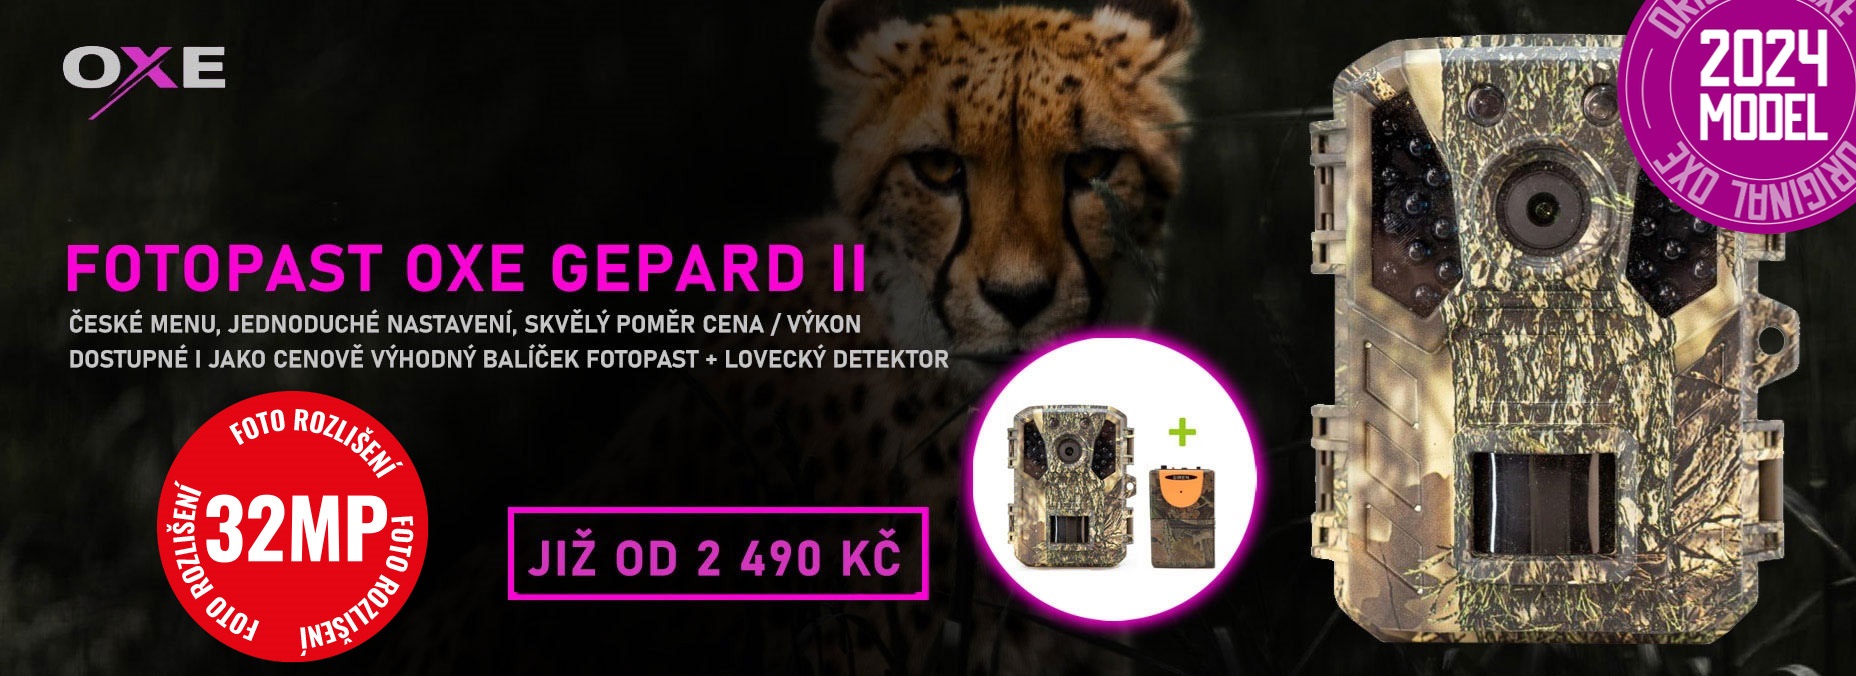 Fotopast OXE Gepard II